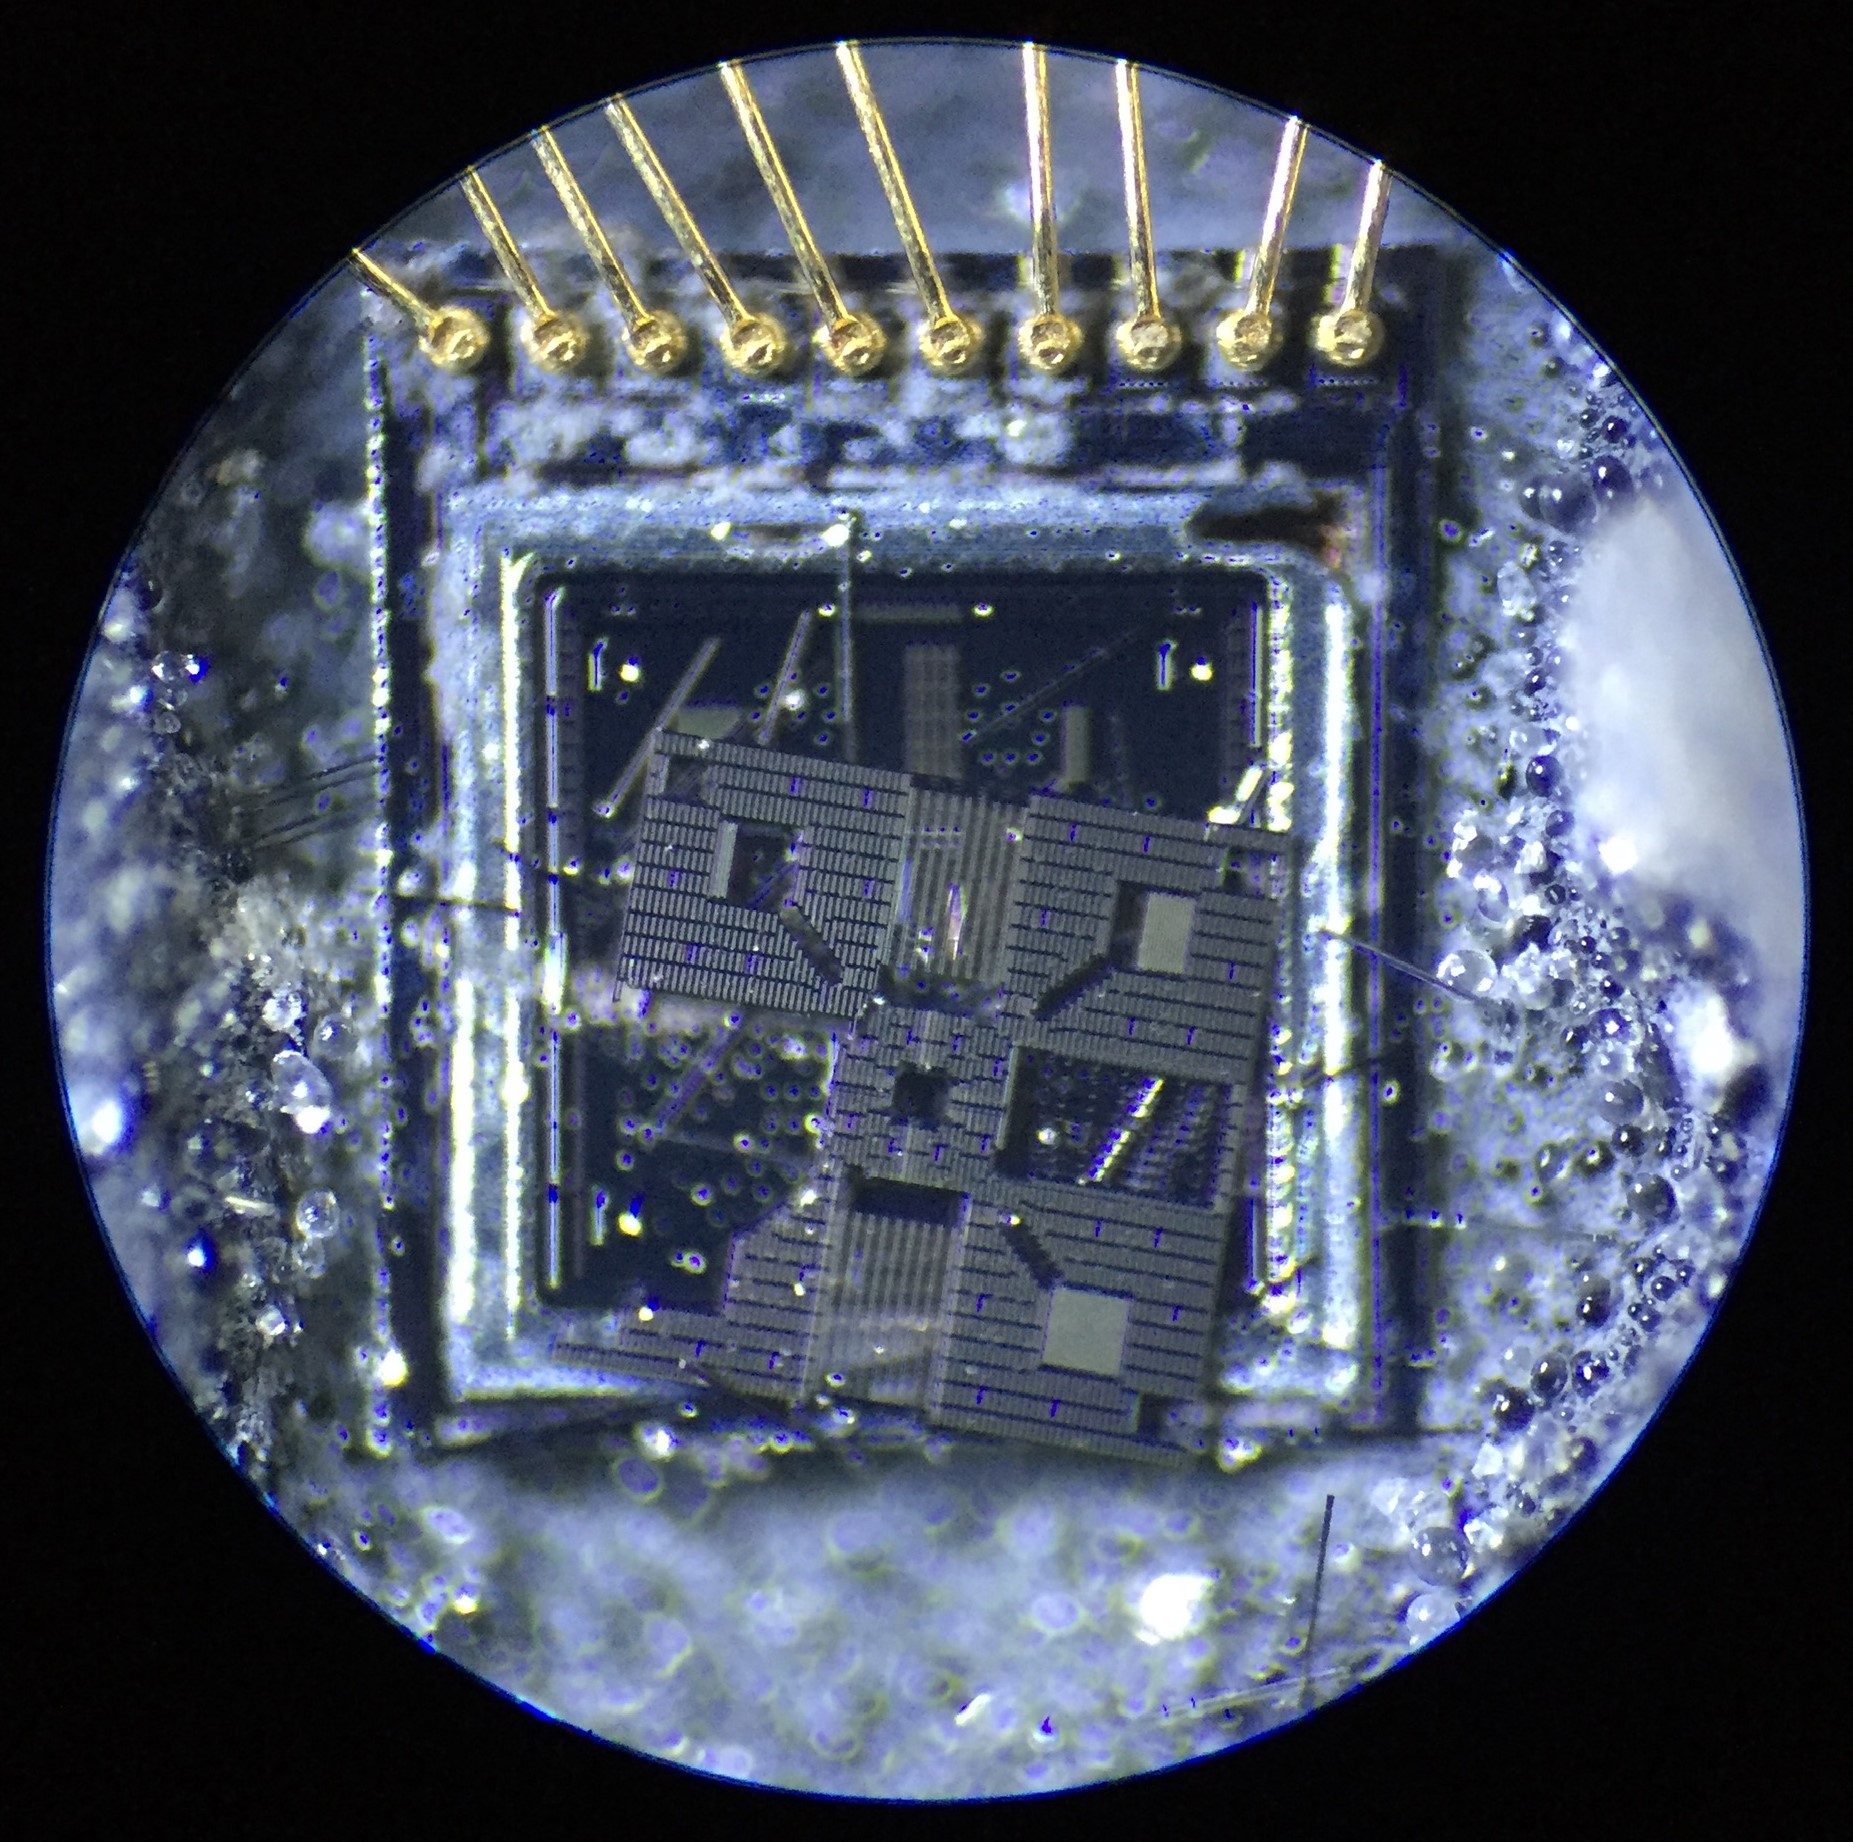 Micro: ADXL345 accelerometer, destroyed during delidding